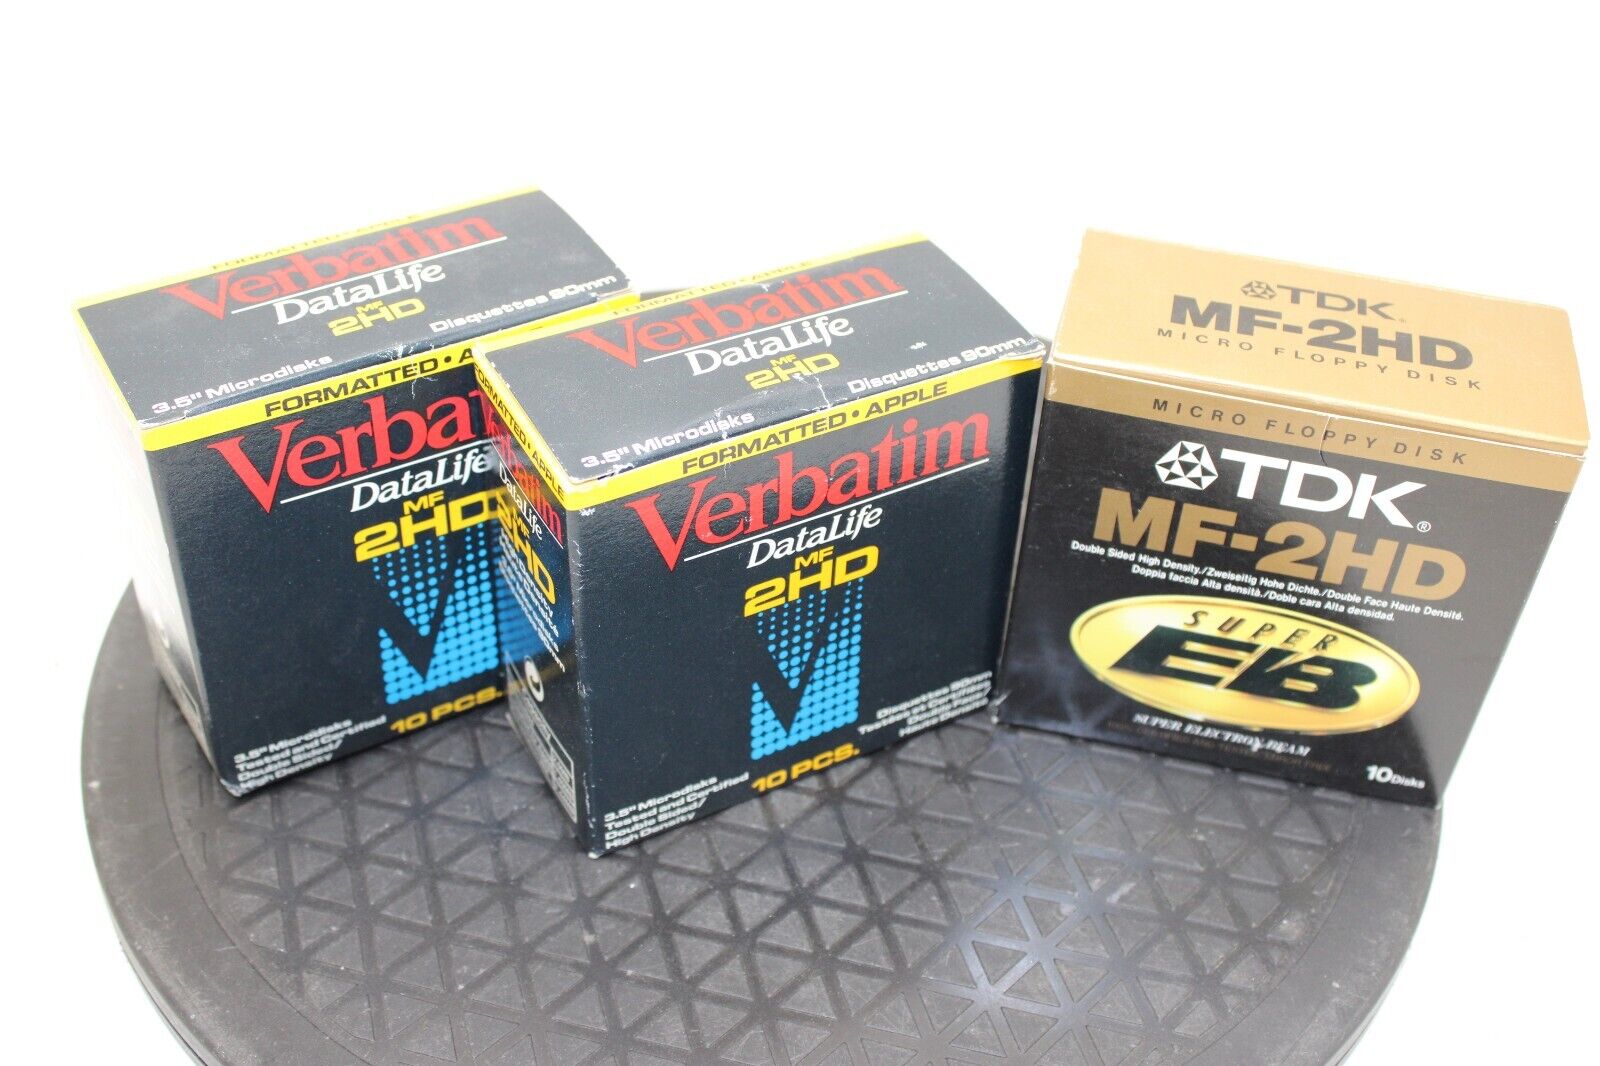 Lot of 24 MF-2HD Floppy Diskettes - New Open Box - TDK & Verbatim - Apple Format